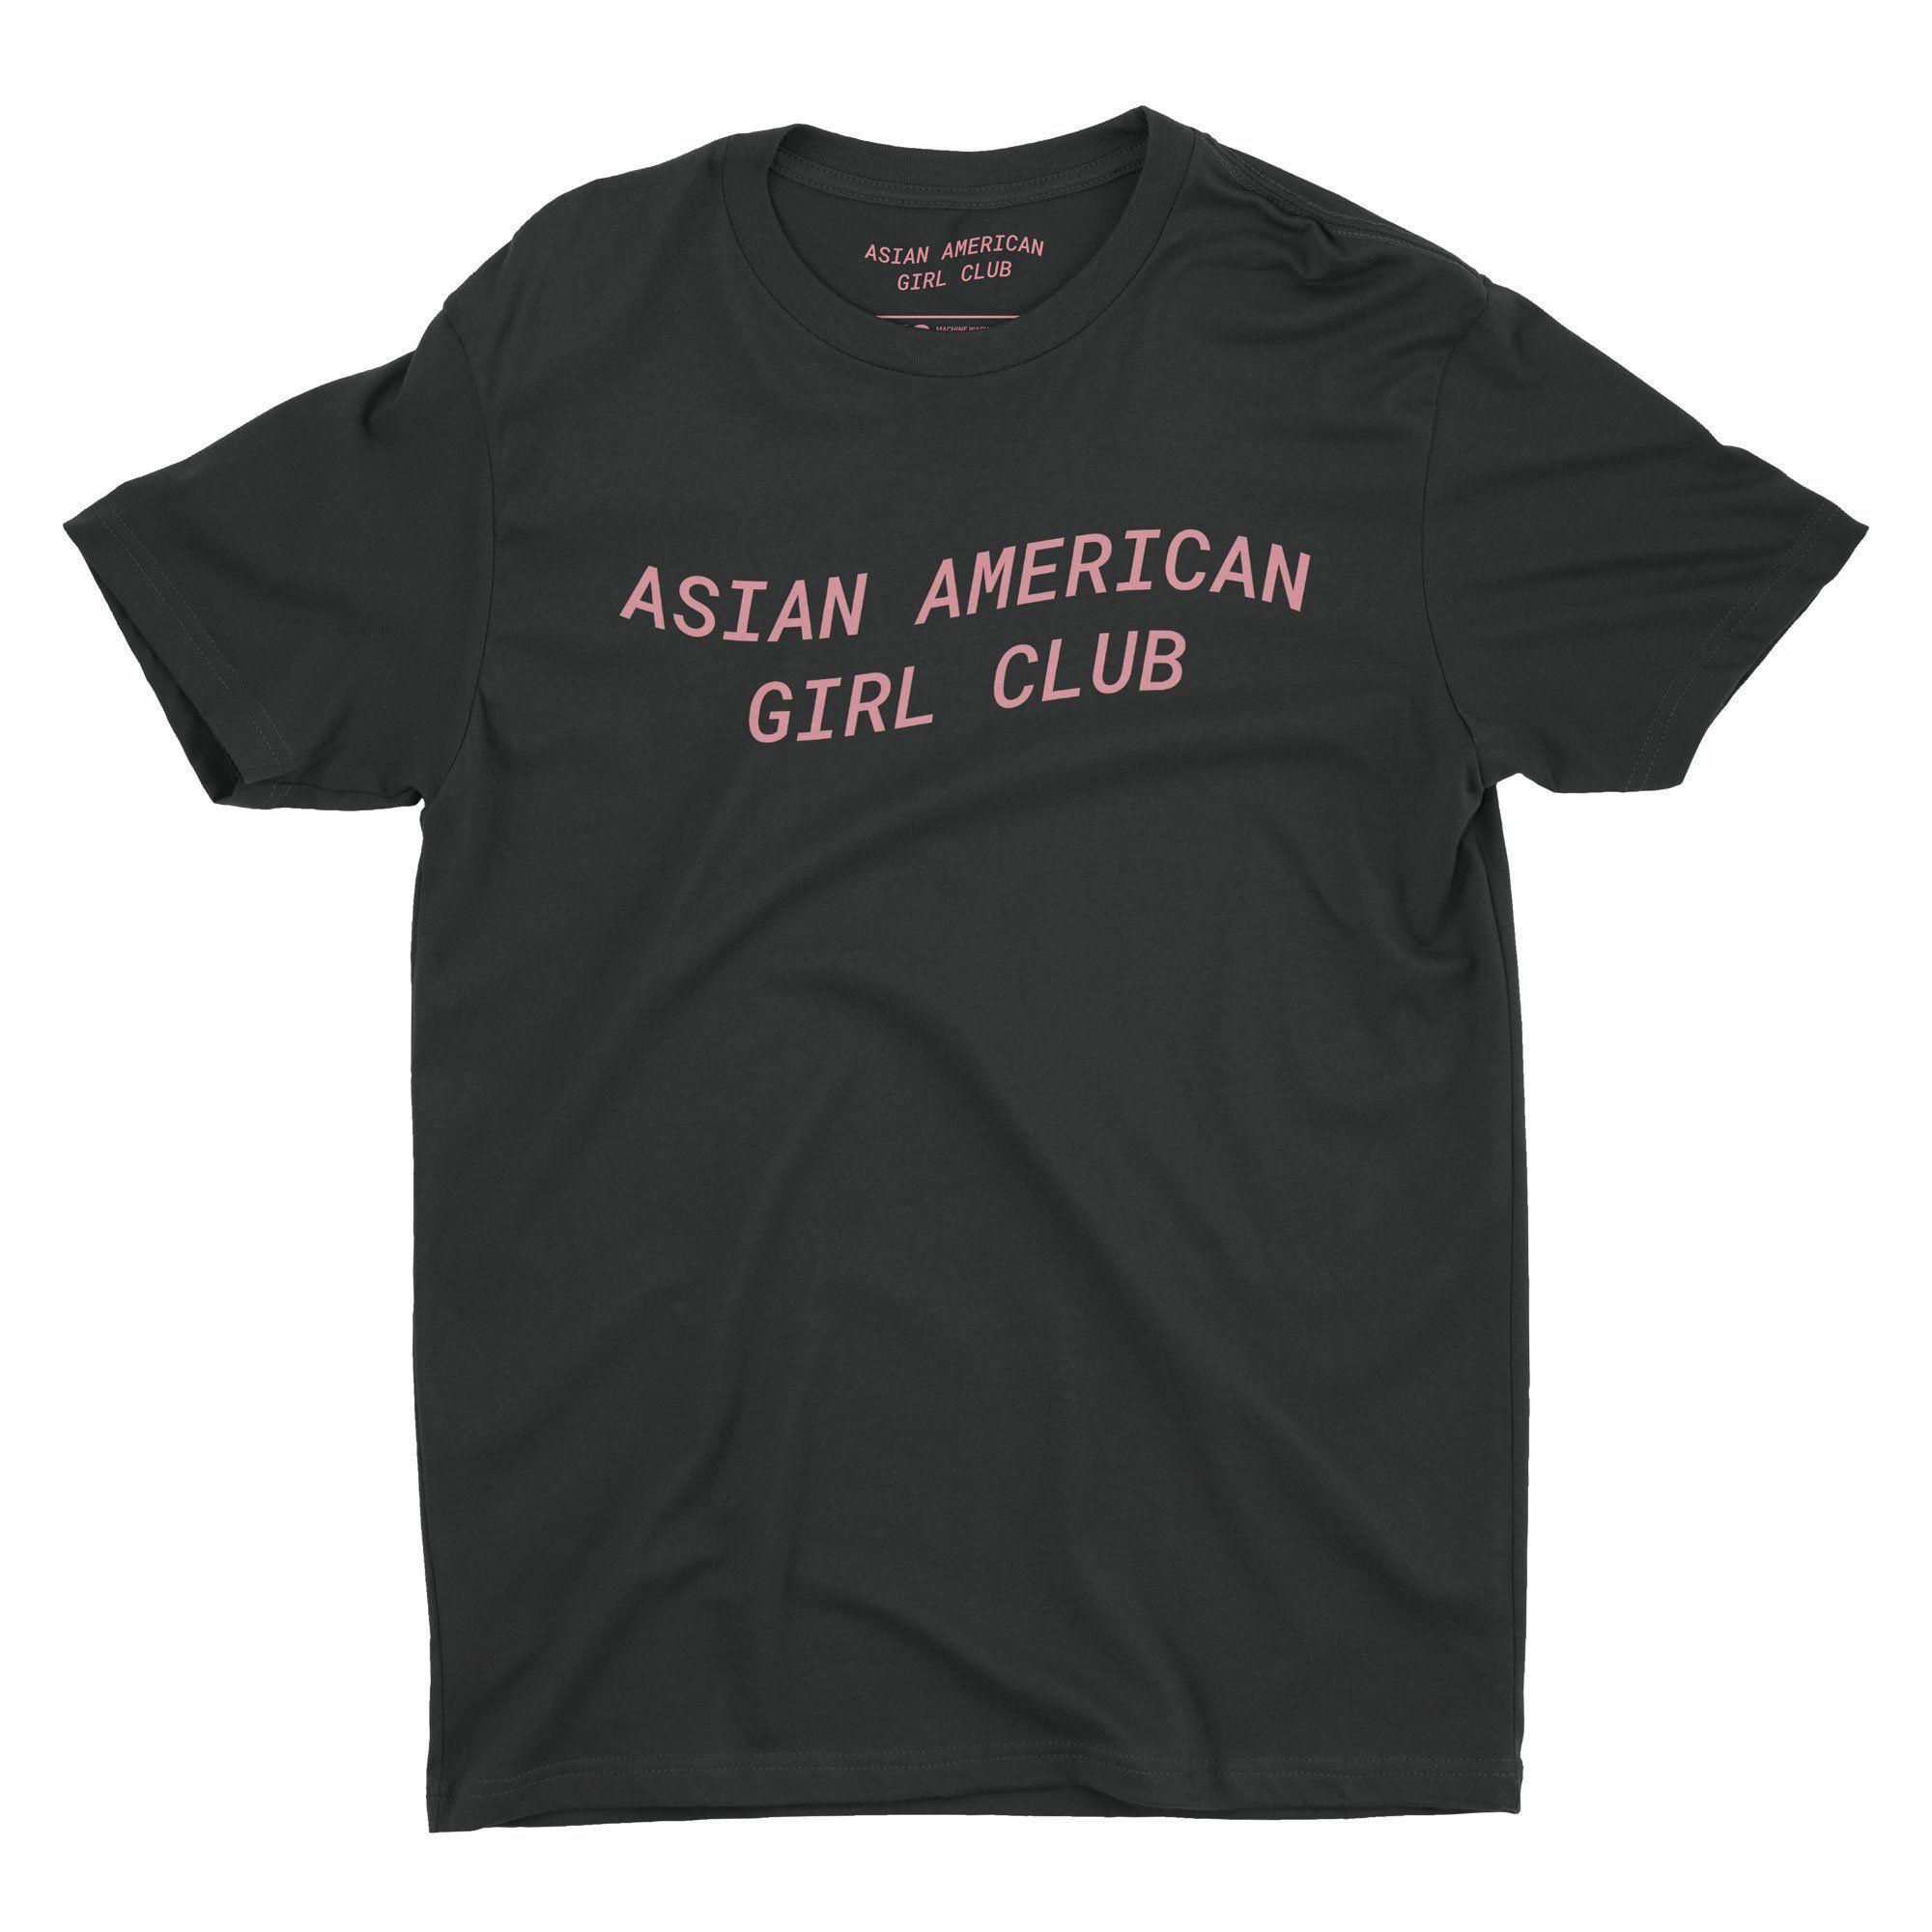 Asian American Girl Club (Unisex Black Tee)